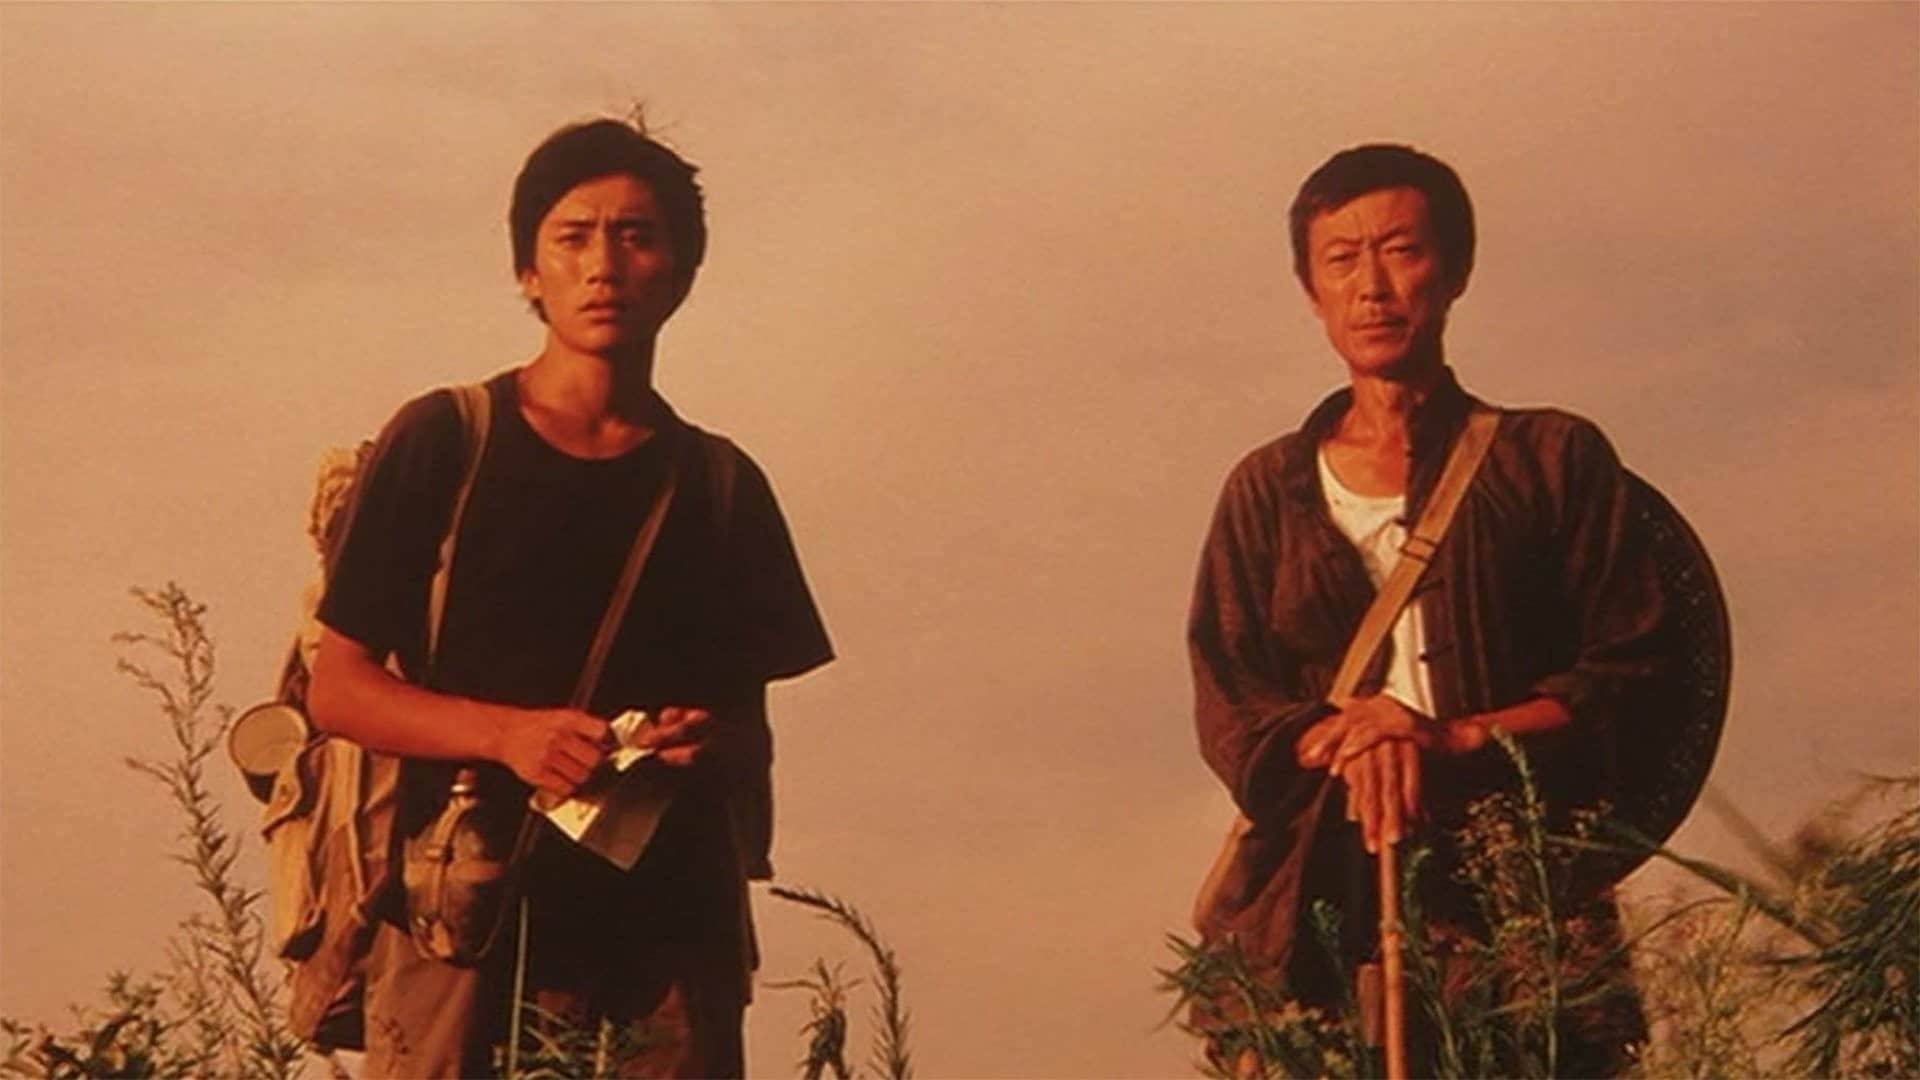 Postmen in the Mountains (1999) by Huo Jianqi